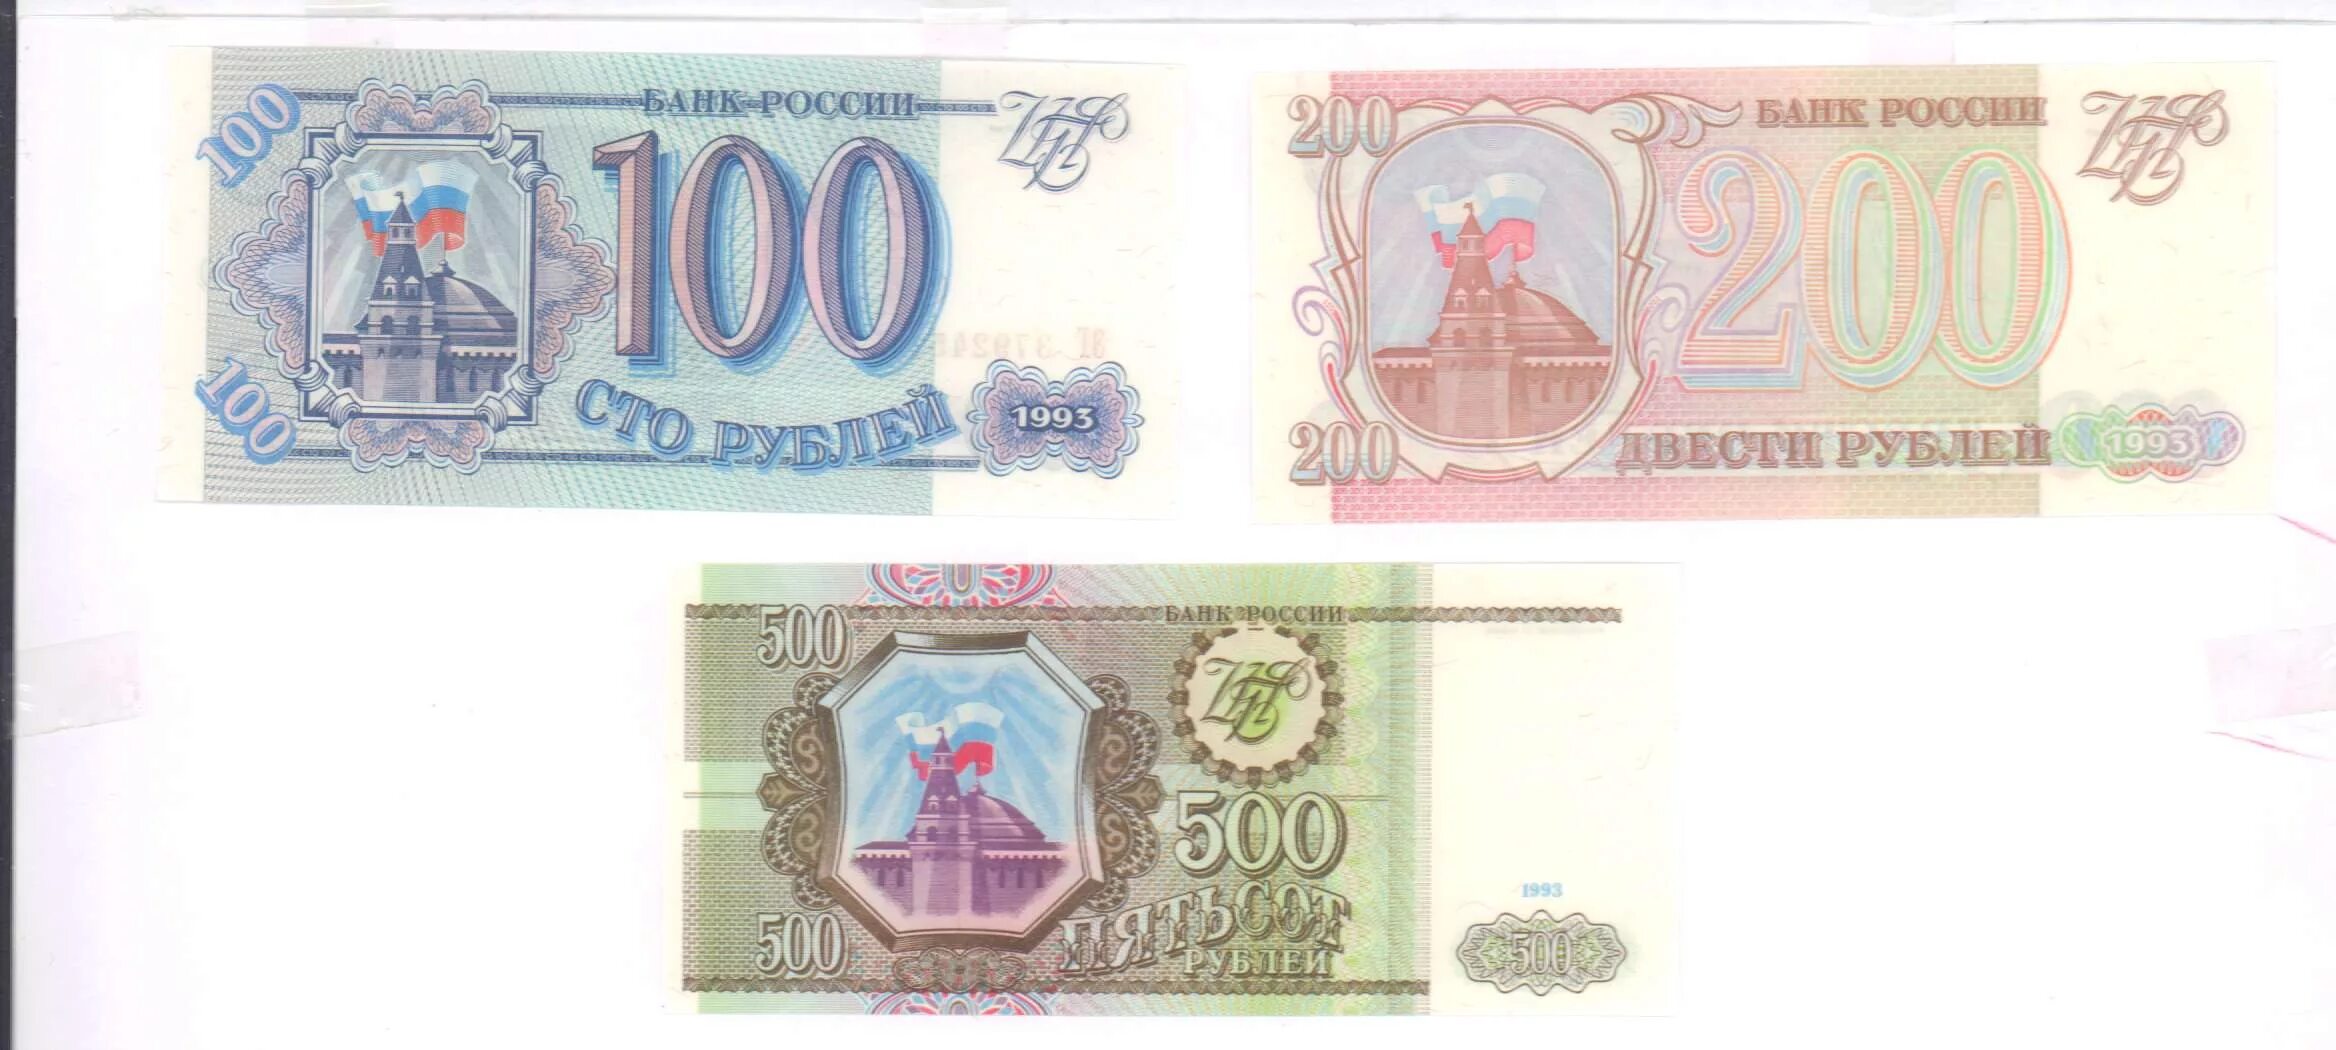 500 Рублей 1993. Пятьсот рублей СССР 1993. 500 Рублей 1993 года. 500 Рублей 1993 года бумажные.